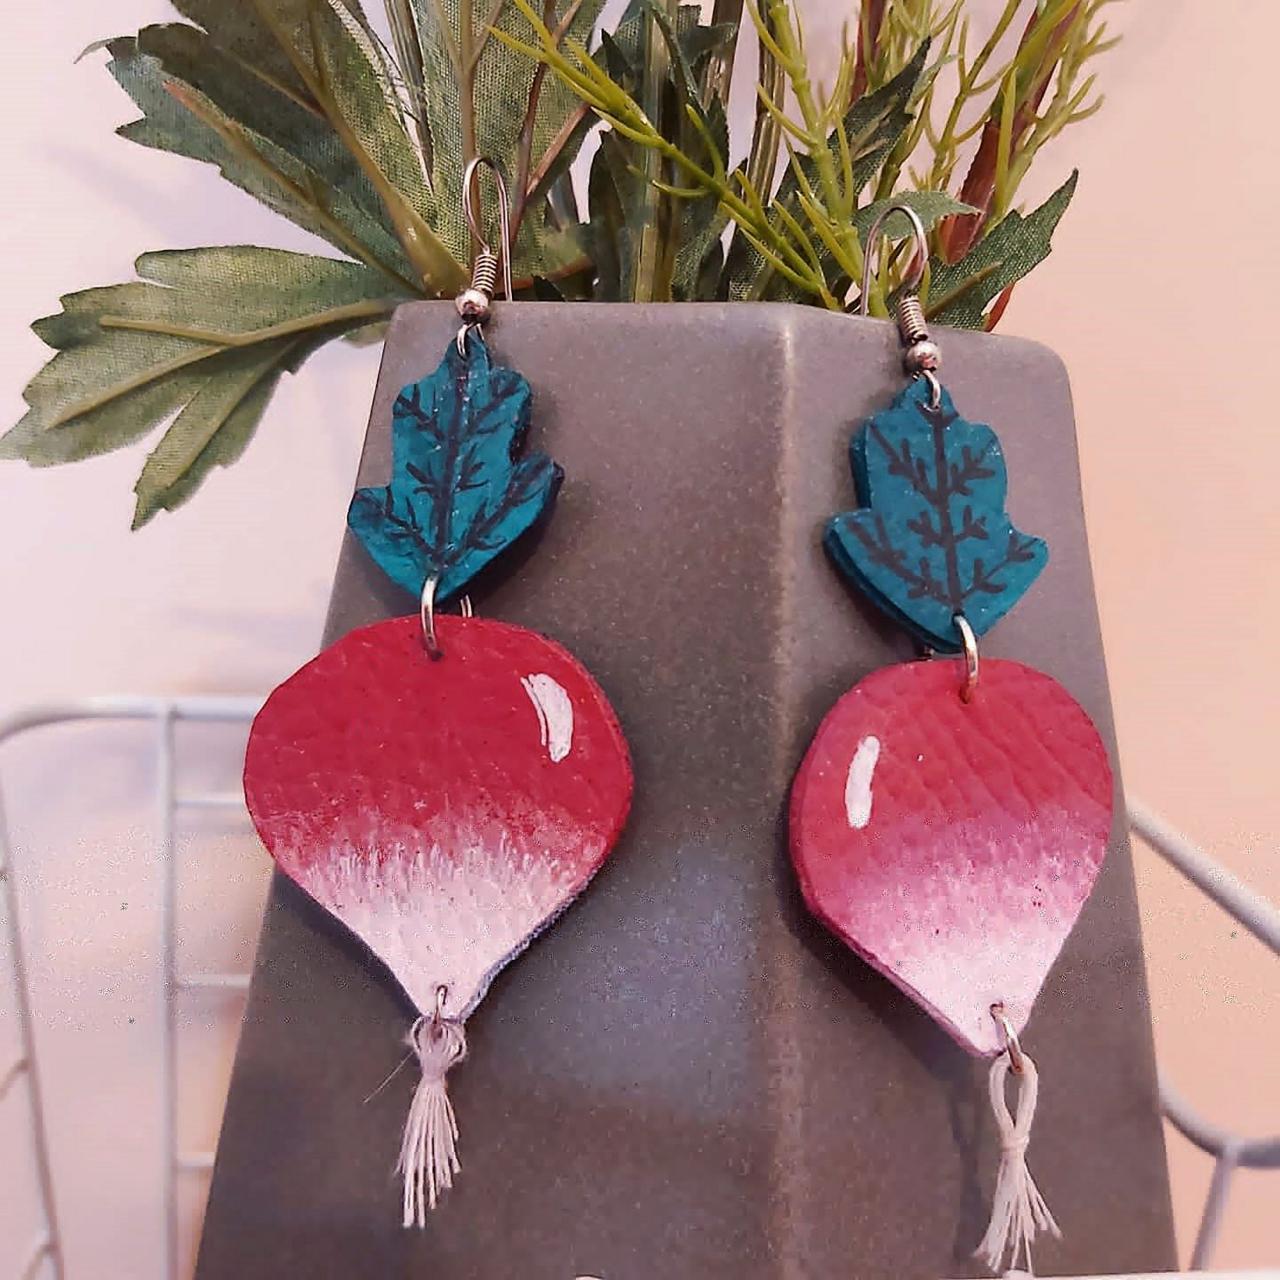 Radish earrings , vegetable earrings , dangle earrings . Acrylic painted faux leather